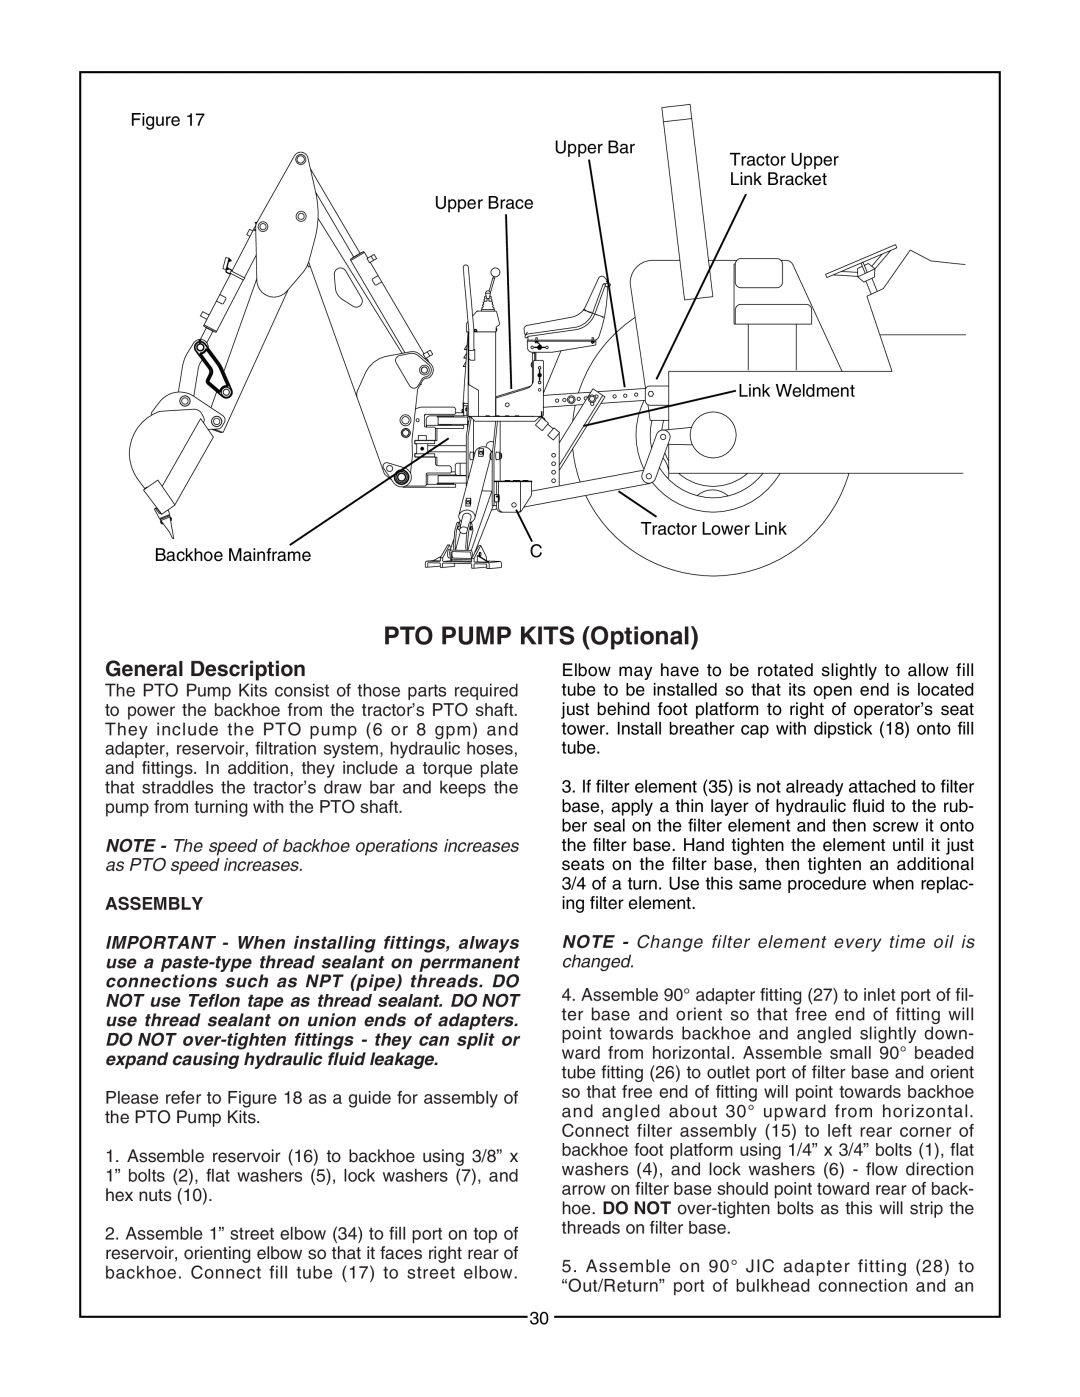 Bush Hog 2165 manual PTO PUMP KITS Optional, General Description, Assembly 